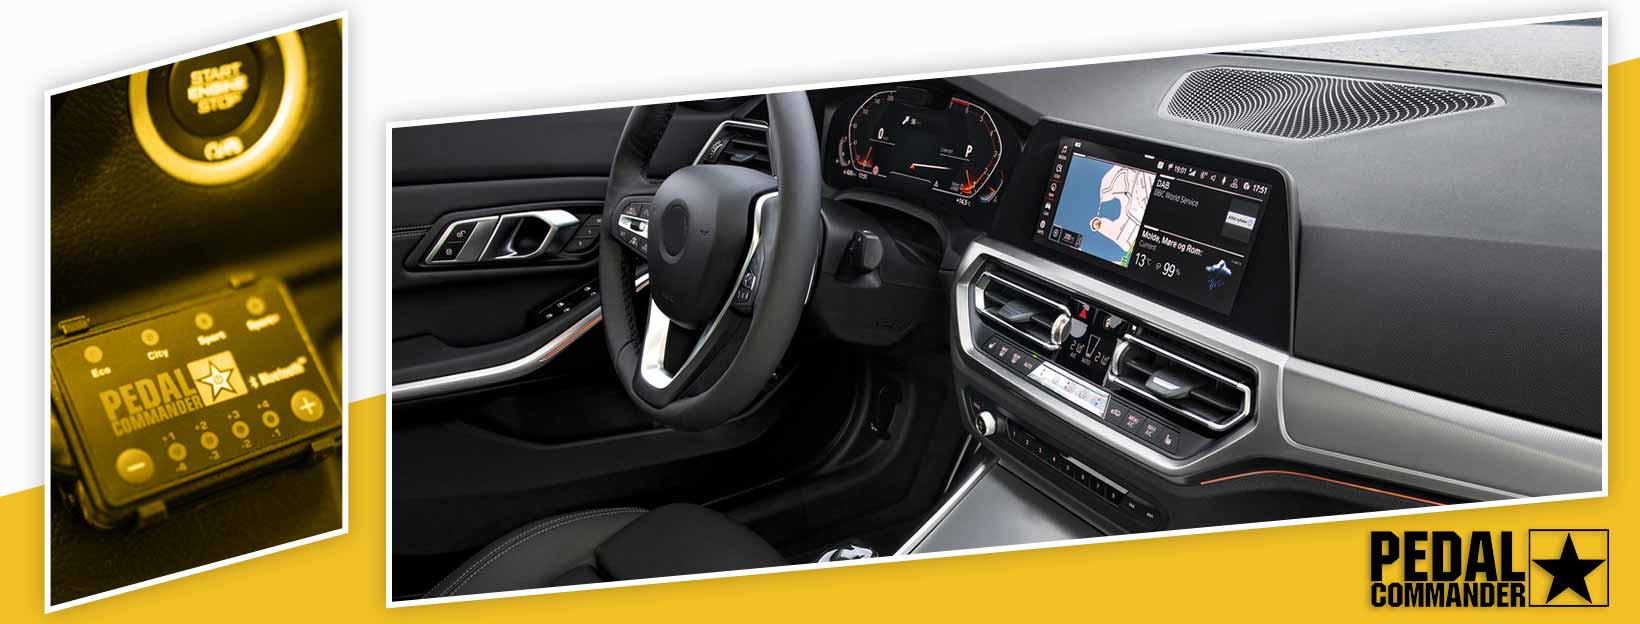 Pedal Commander for BMW X2 - interior